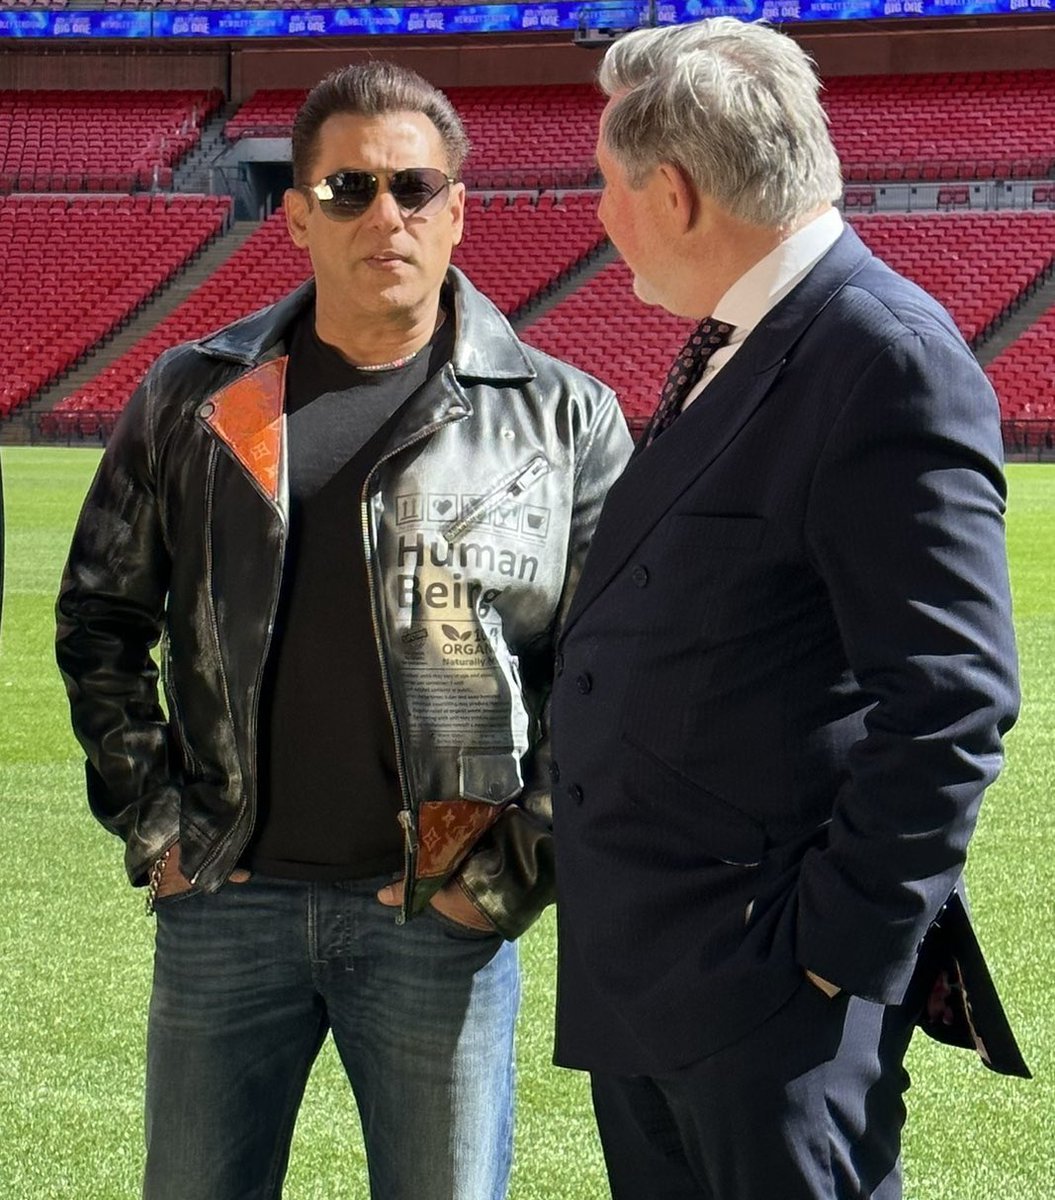 Latest: Megastar Salman Khan and British MP Barry Gardiner at Wembley Stadium.@BeingSalmanKhan #SalmanKhan